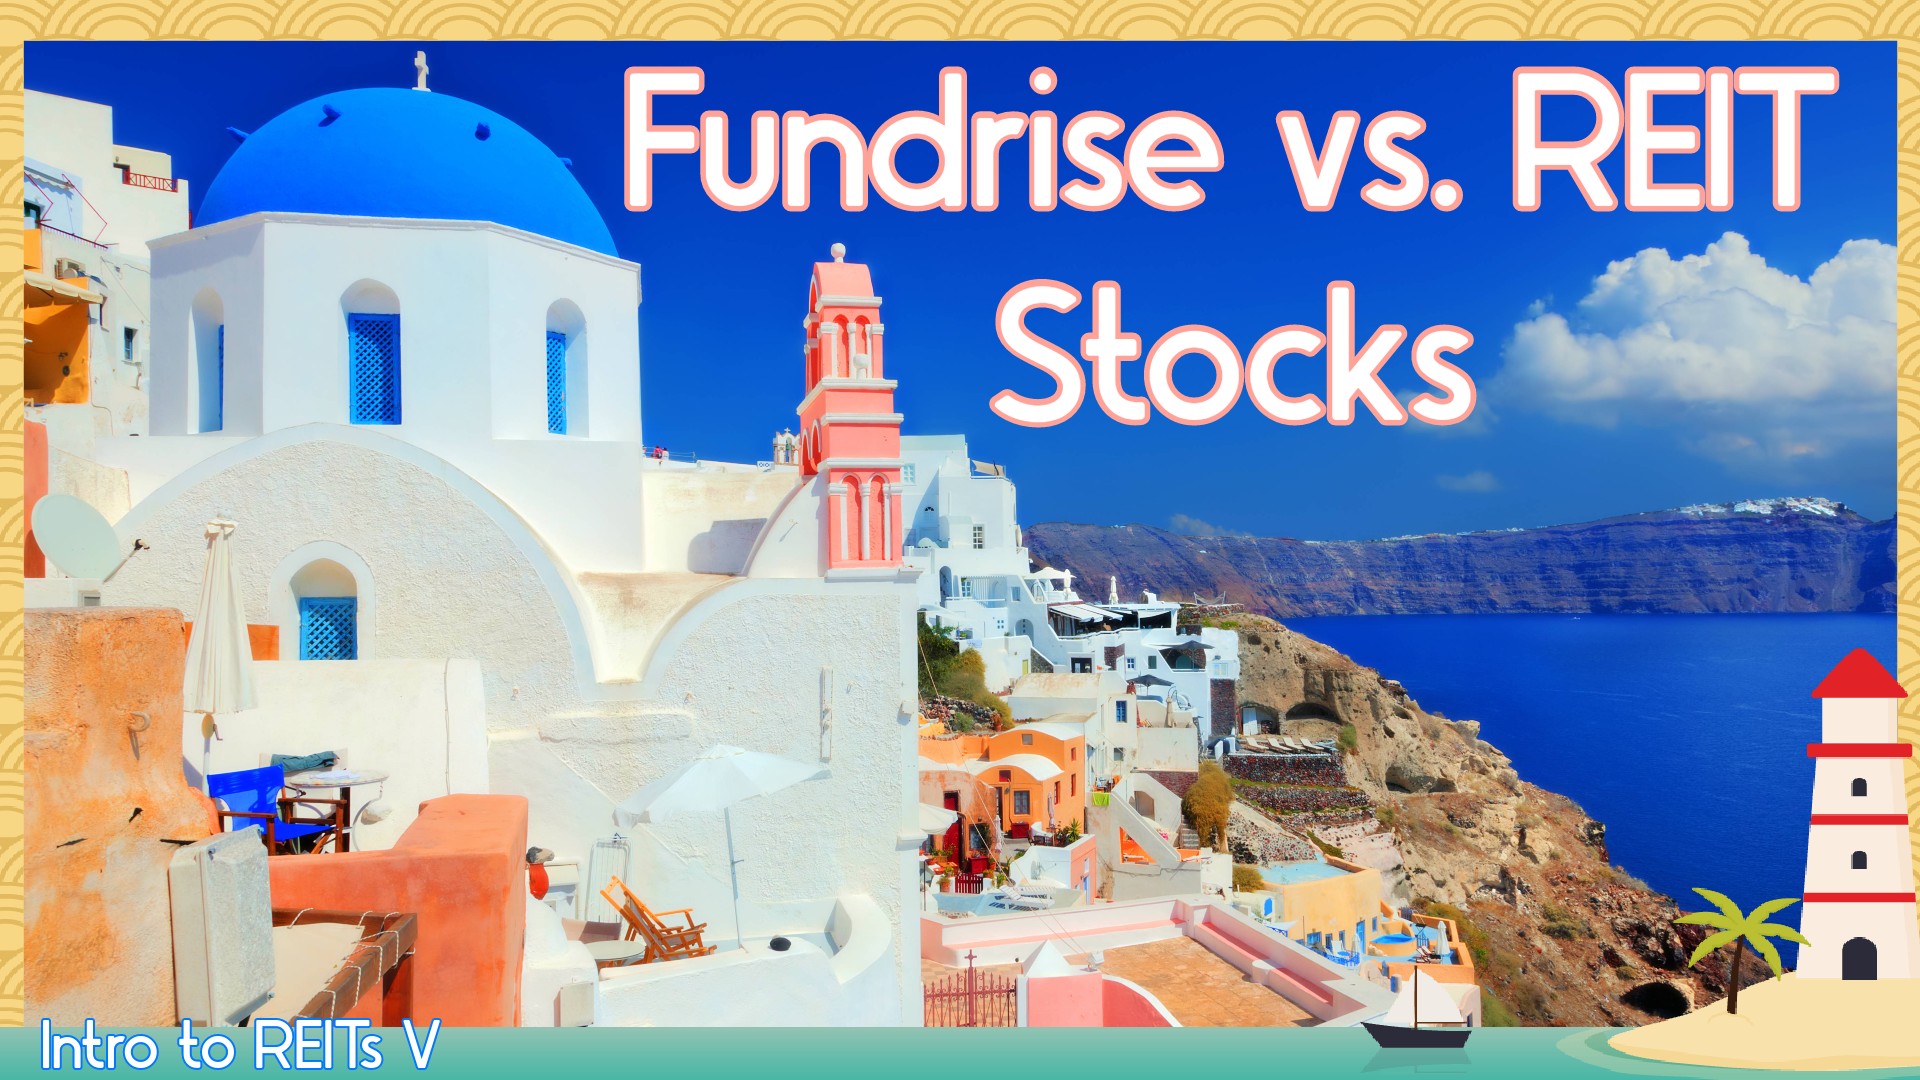 Intro to REITs V: Fundrise vs. REIT Stocks